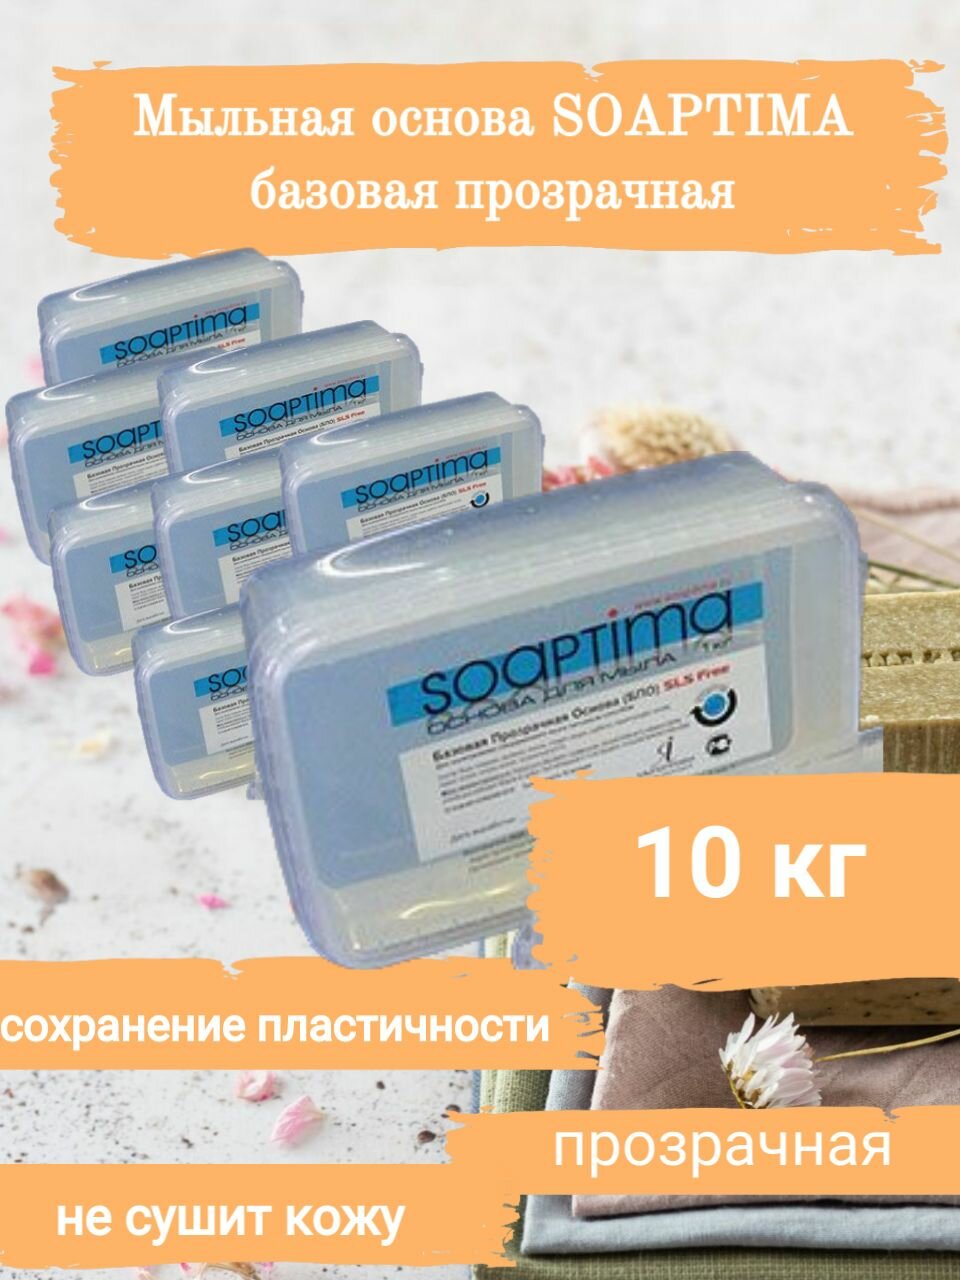 SOAPTIMA Мыльная основа базовая БПО комплект 10 штук, прозрачная, 10кг